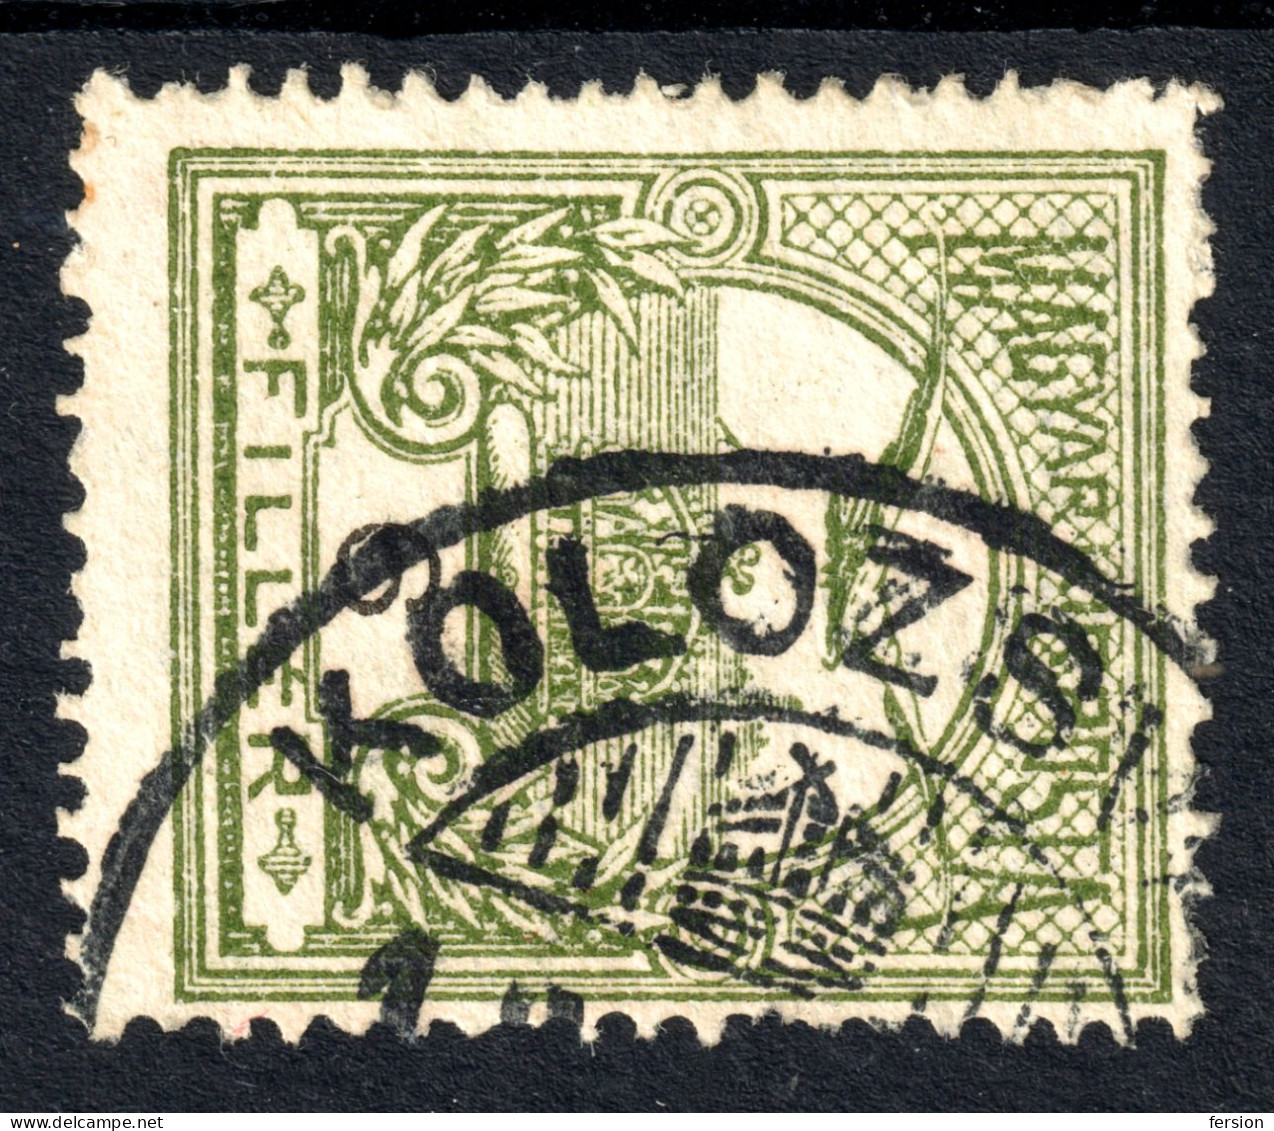 KOLOZSVÁR CLUJ-NAPOCA Postmark / TURUL Crown 1910's Hungary Romania Banat Transylvania KOLOZS County KuK K.u.K - 6 Fill - Siebenbürgen (Transsylvanien)